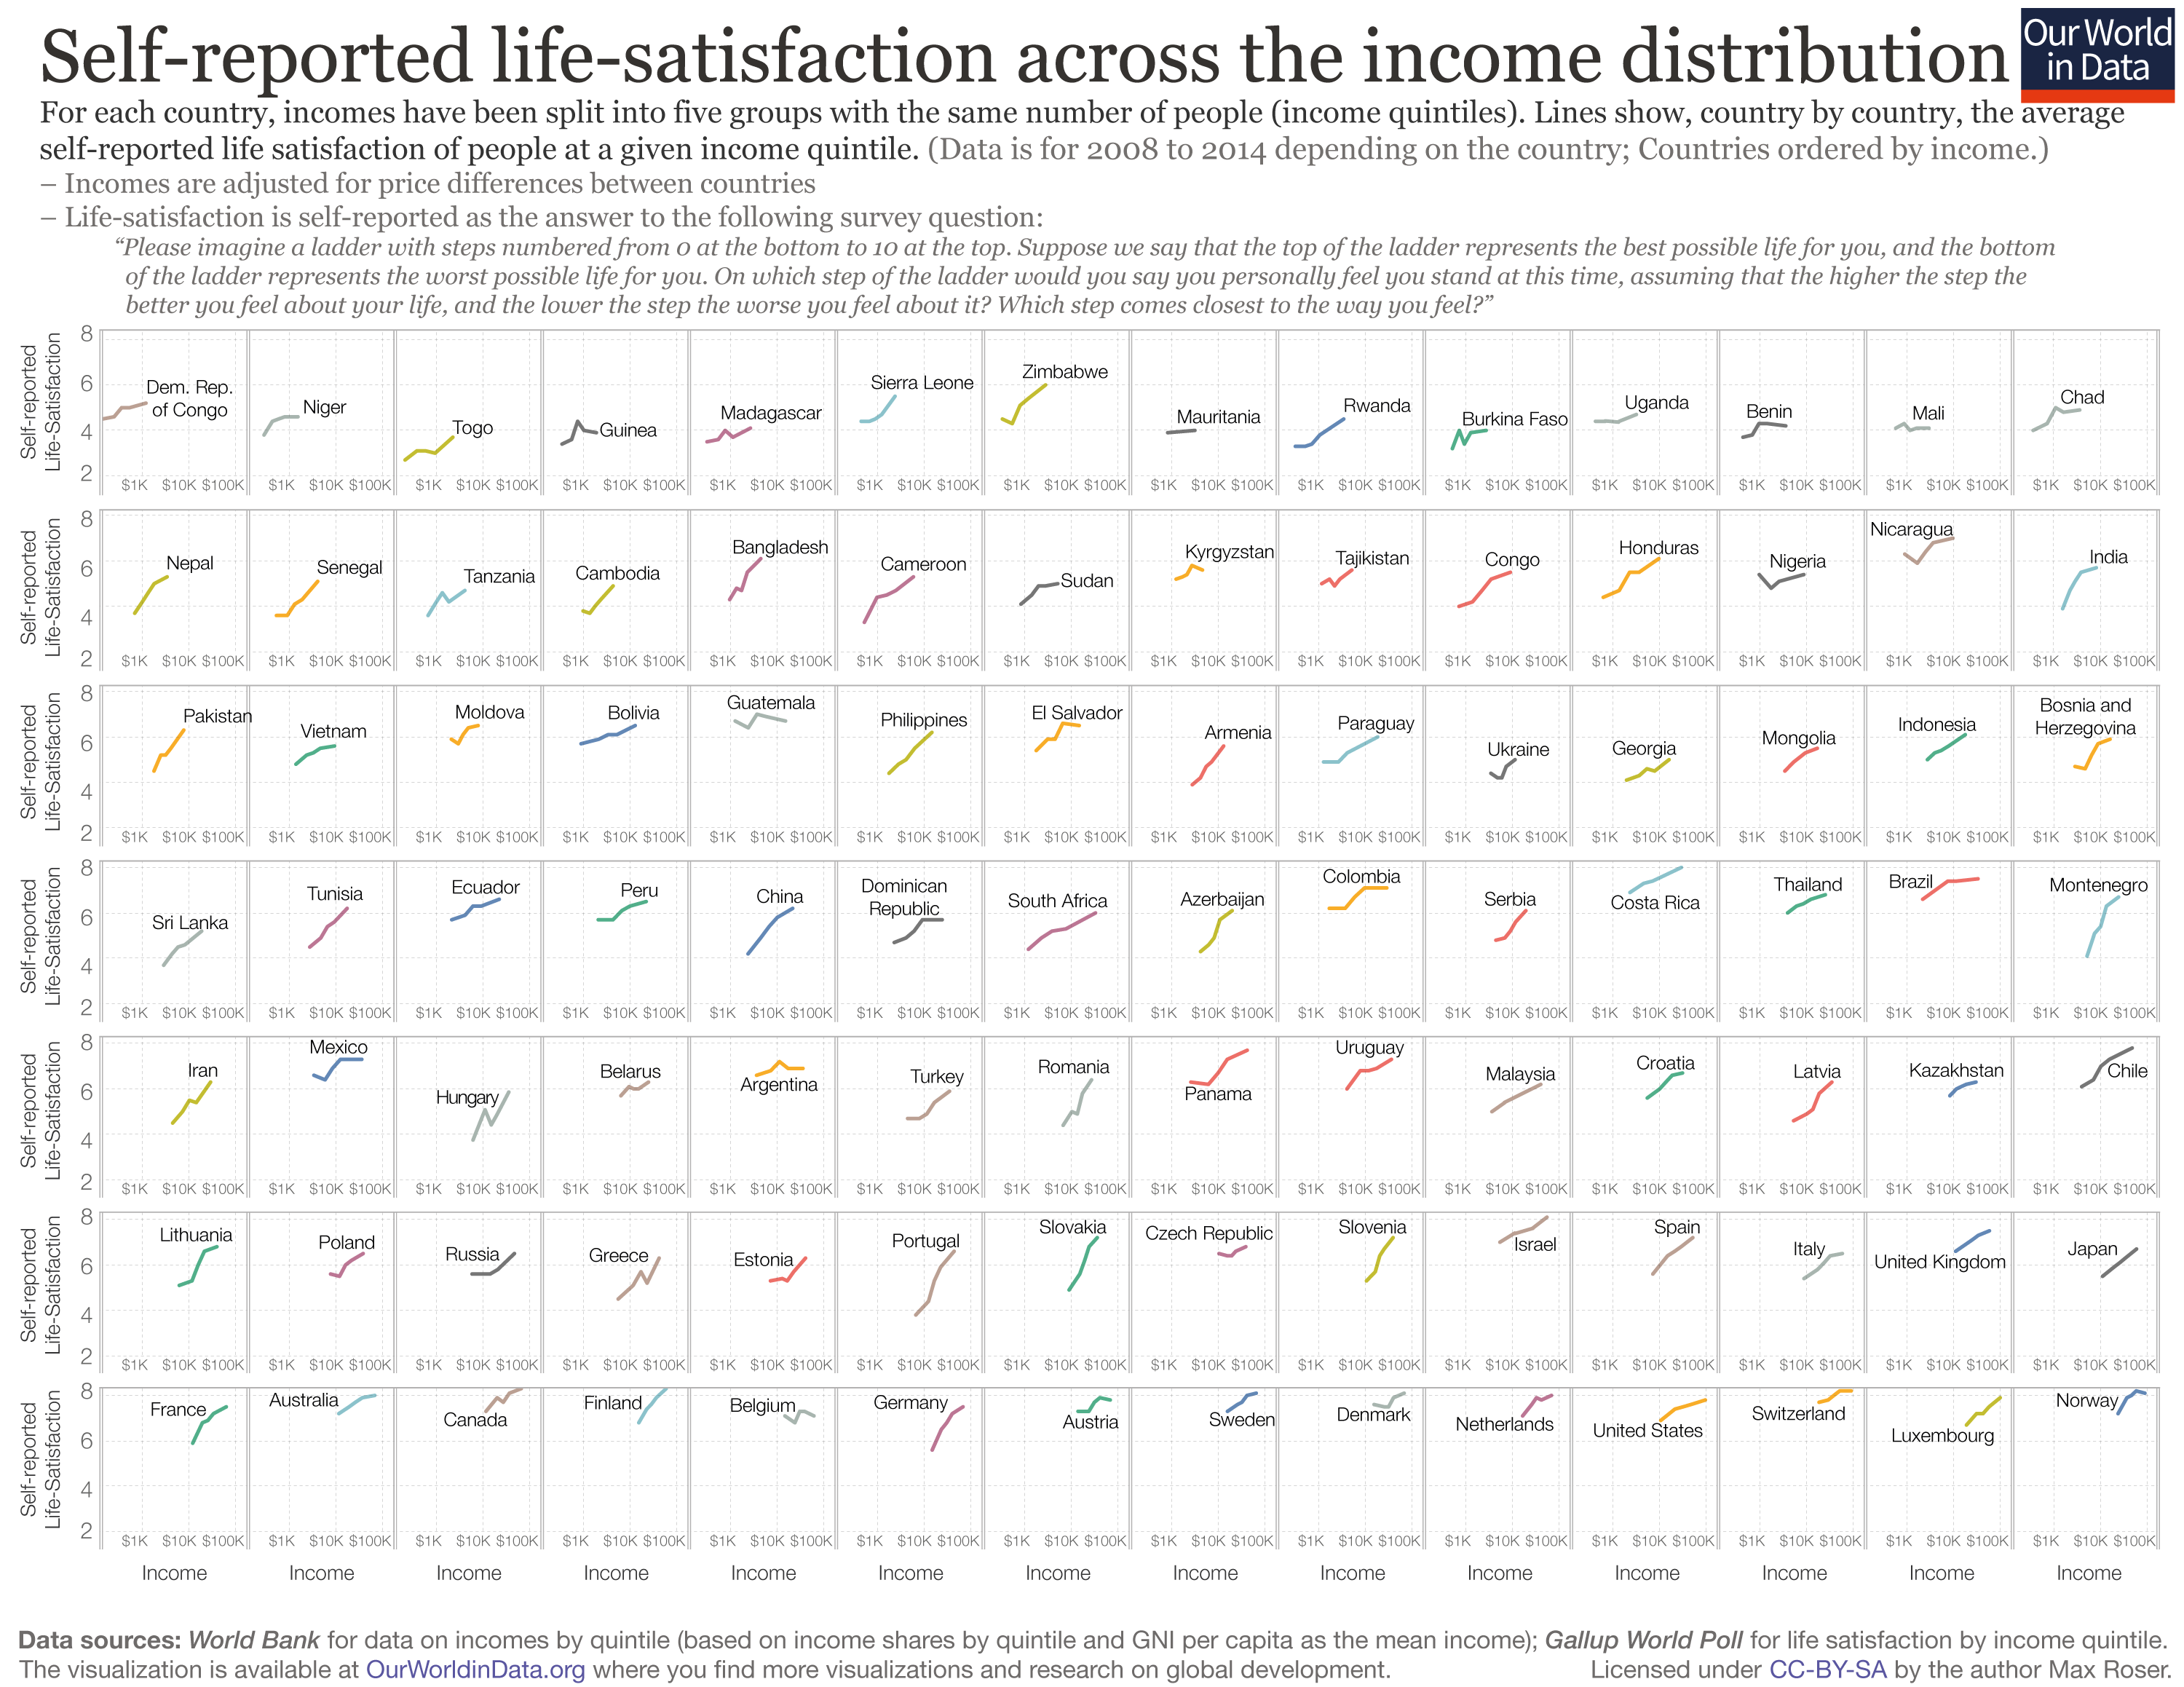 Self-reported life satisfaction across the income distribution